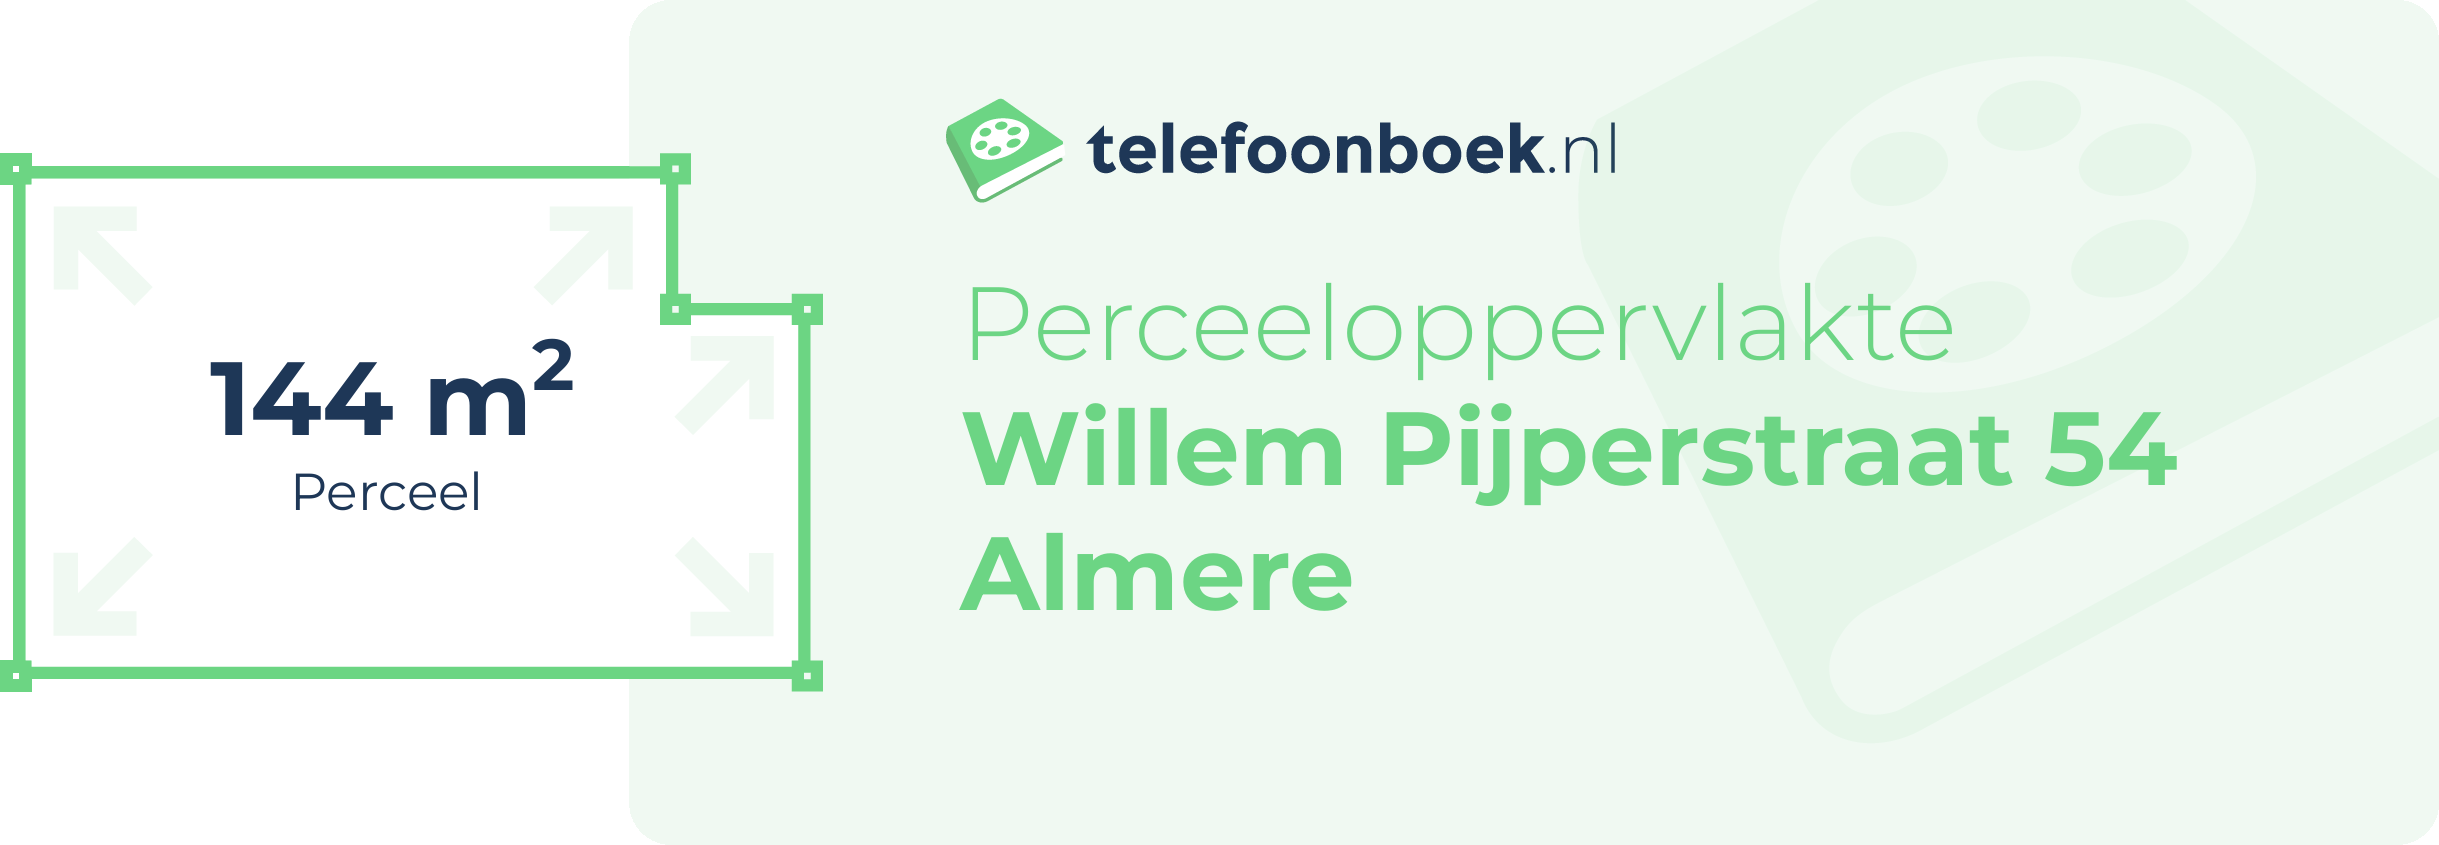 Perceeloppervlakte Willem Pijperstraat 54 Almere